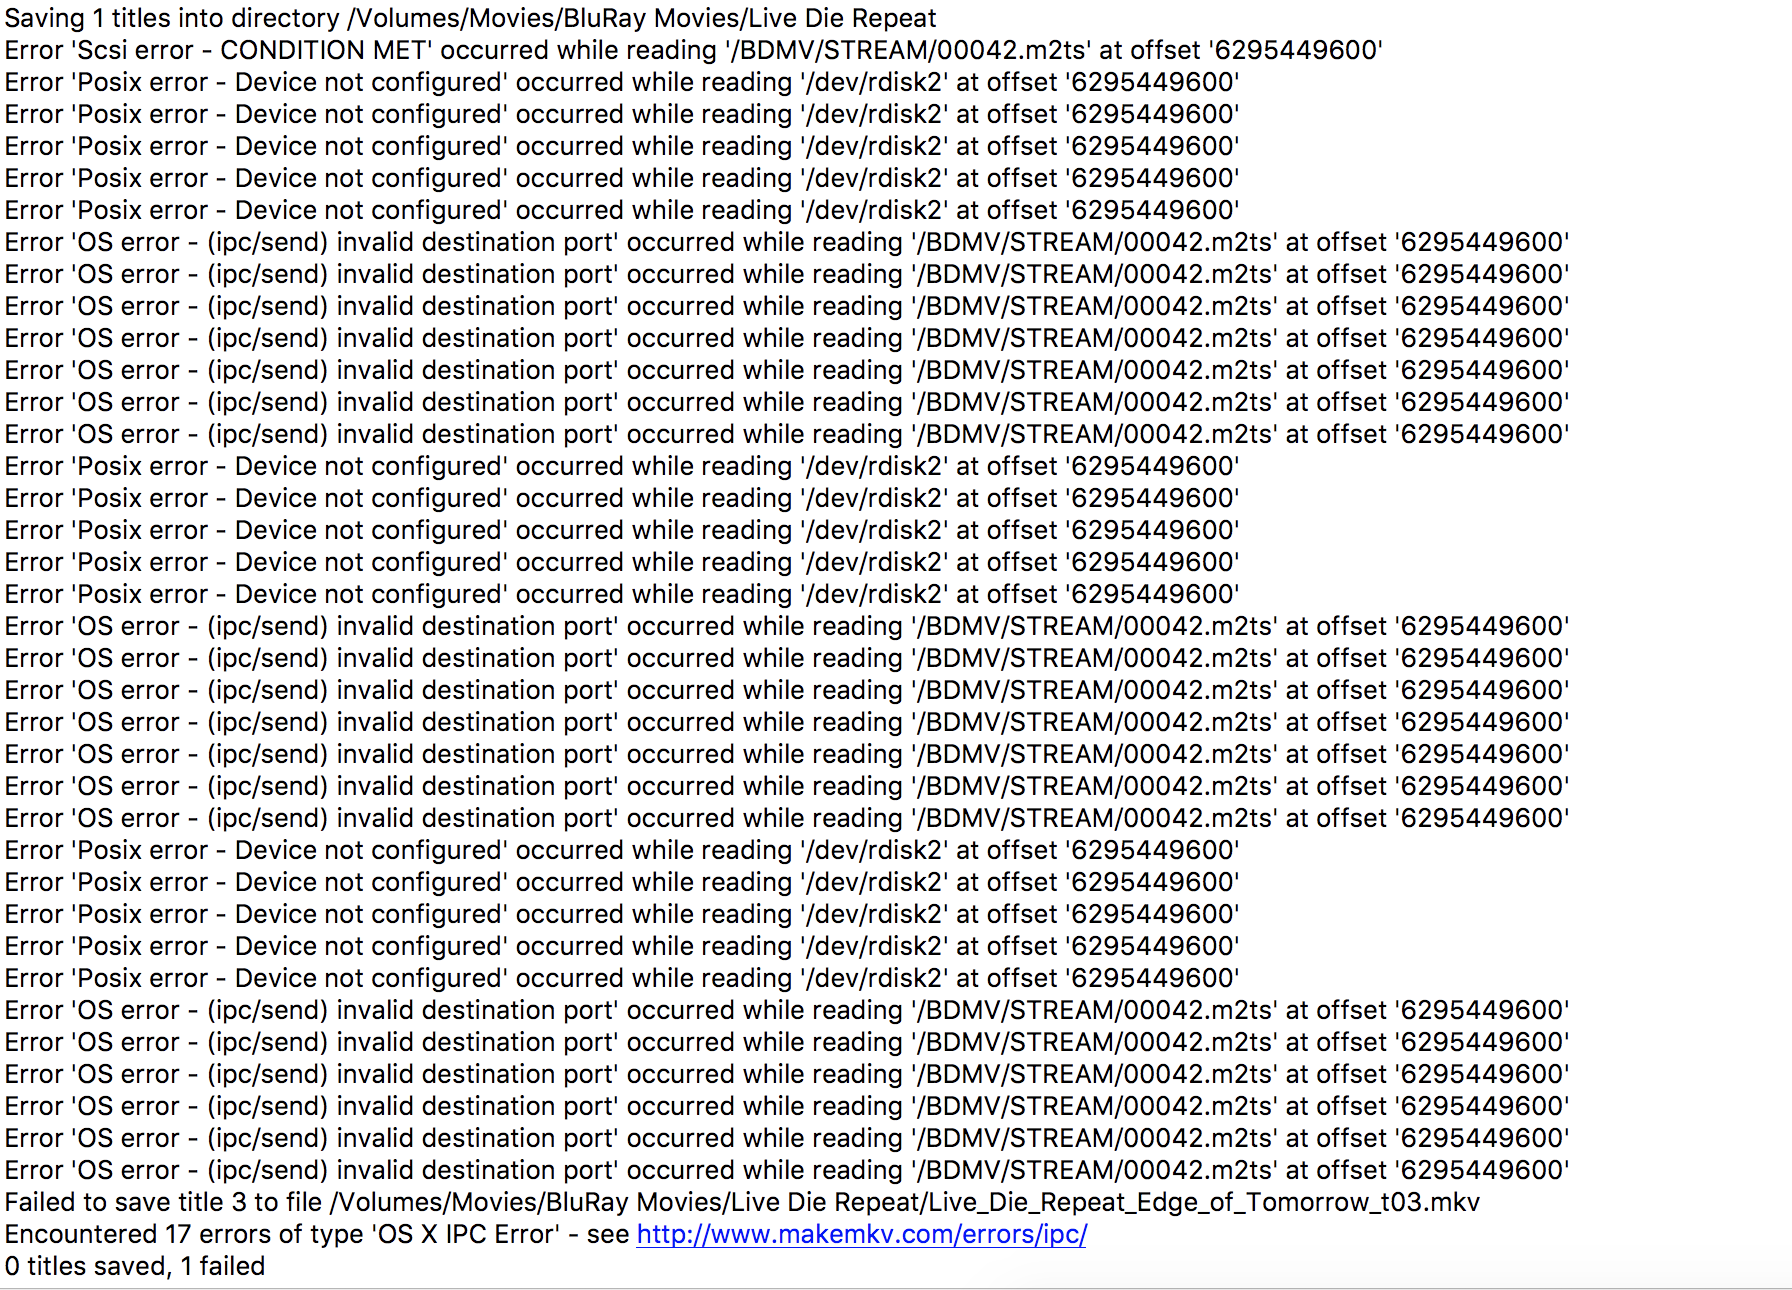 Screen dump of error message